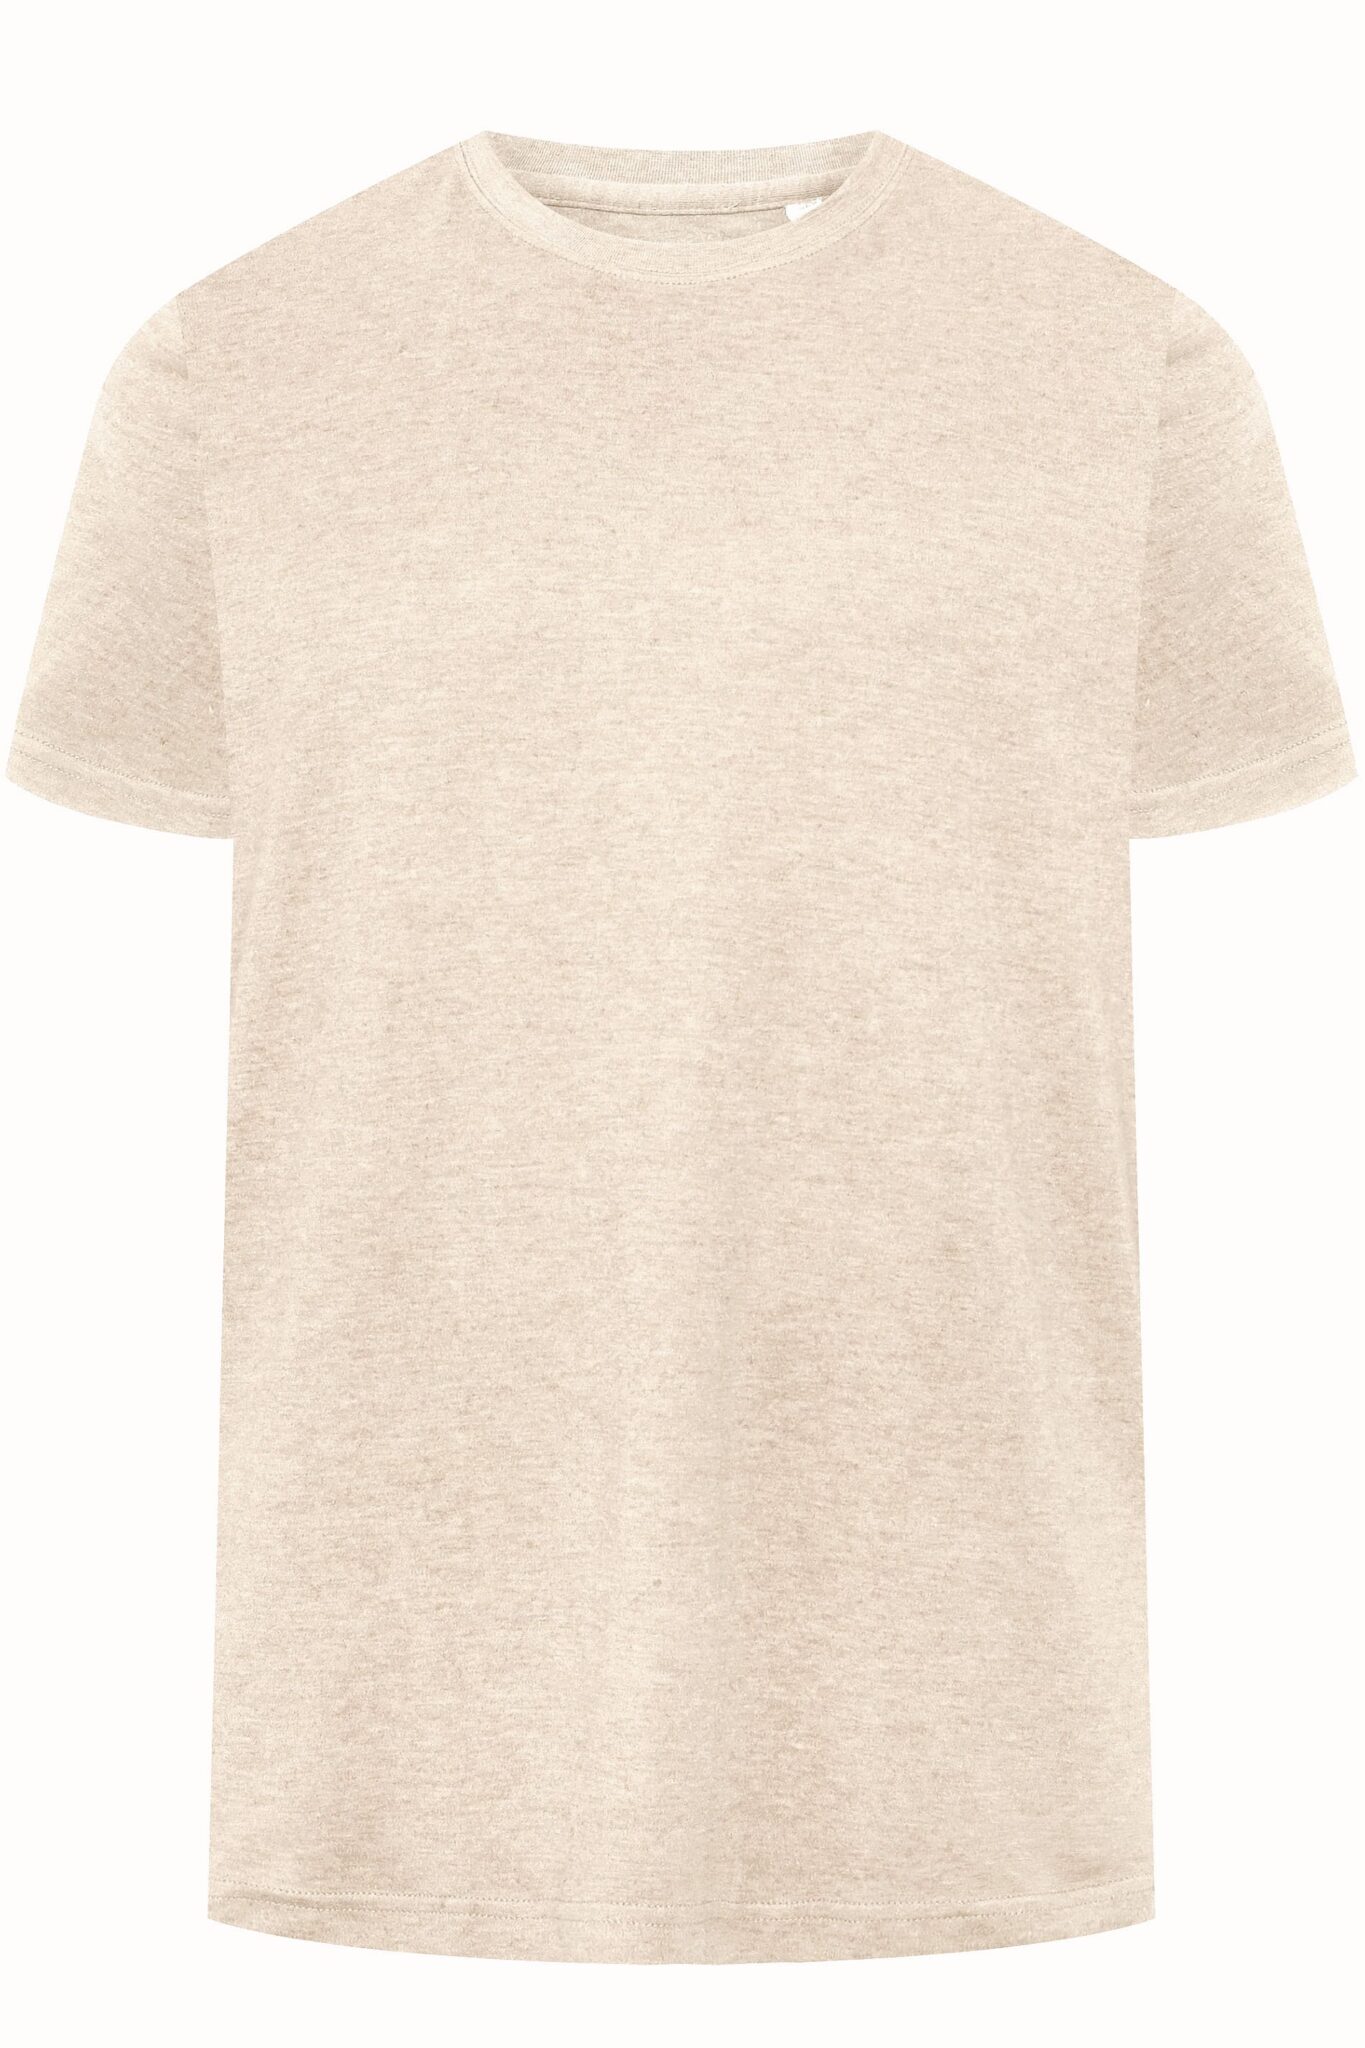 Cream Plain T-Shirt - Tagum City - RB T-shirt, Tarpaulin Printing and Advertising